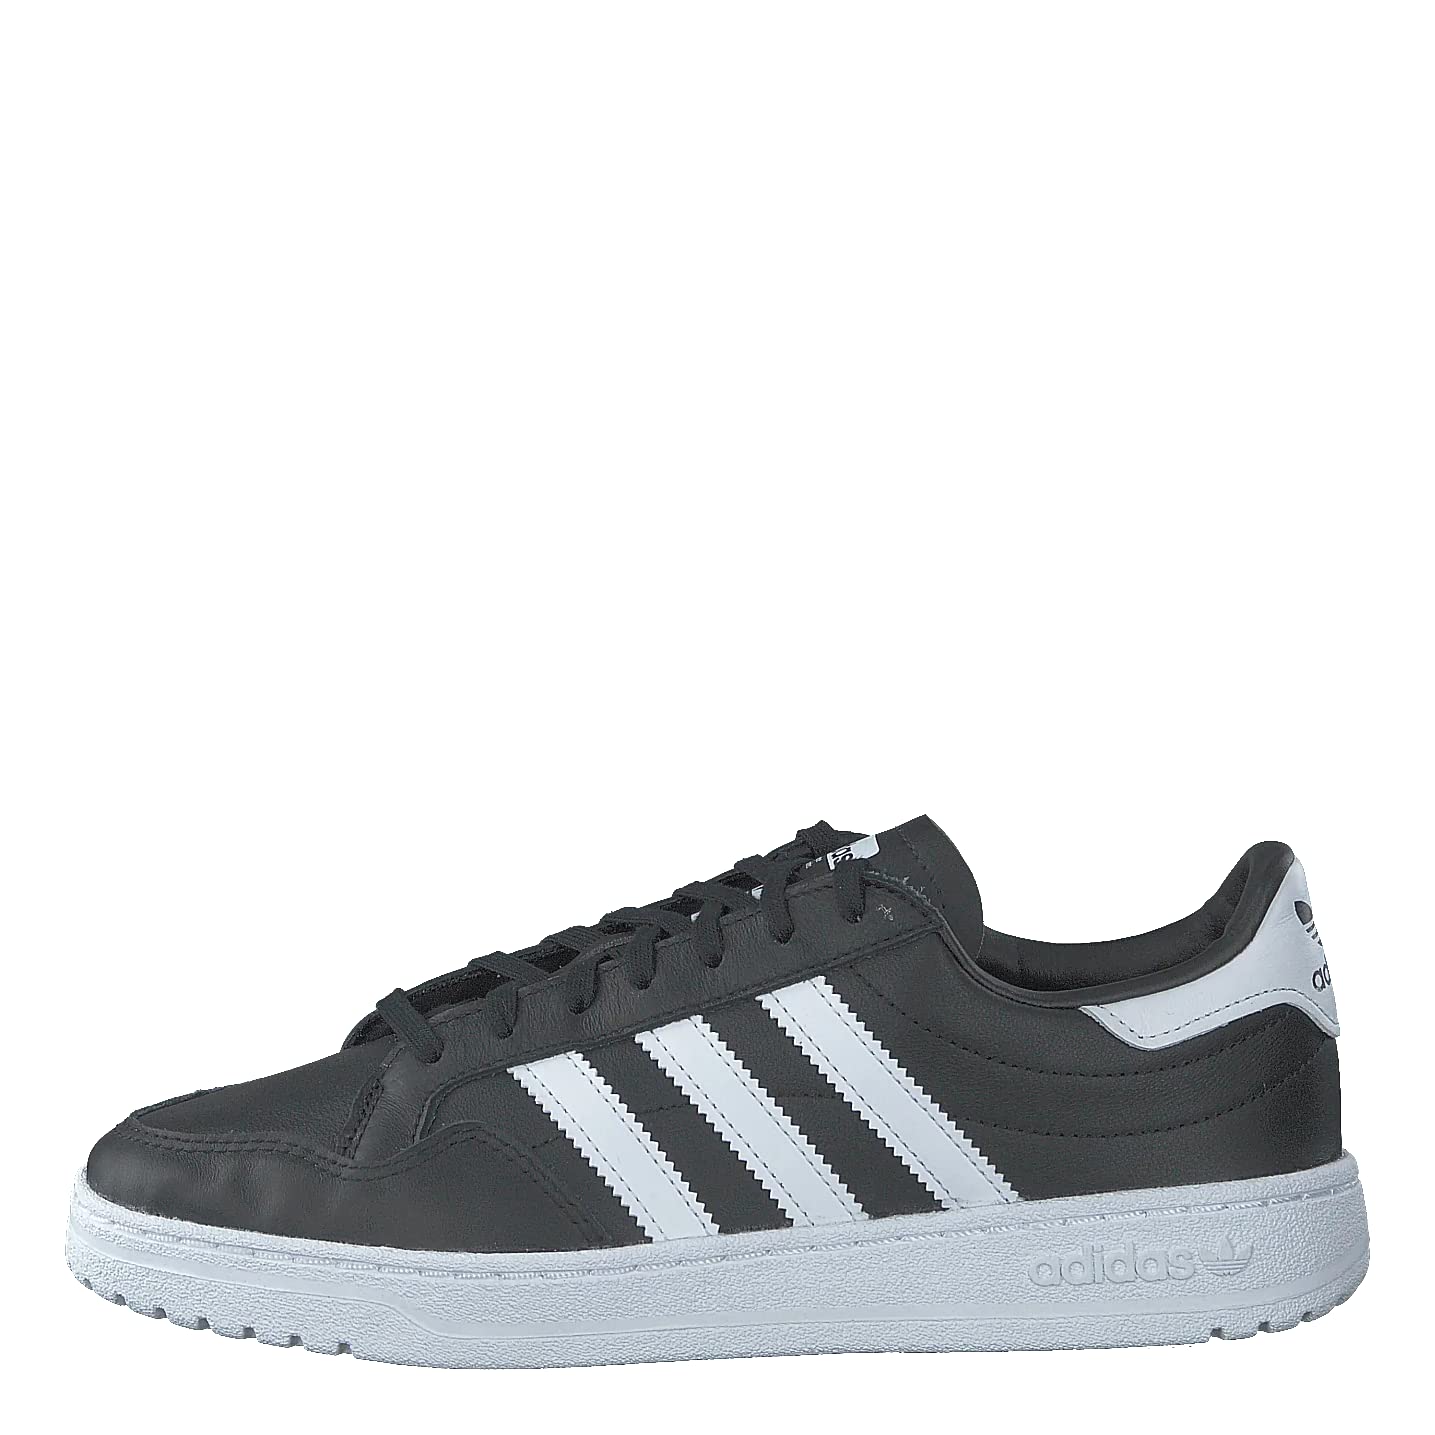 Adidas Herren MODERN 80 EUR Court Running Shoe, Core Black/FTWR White/Grey One F17, 44 2/3 EU